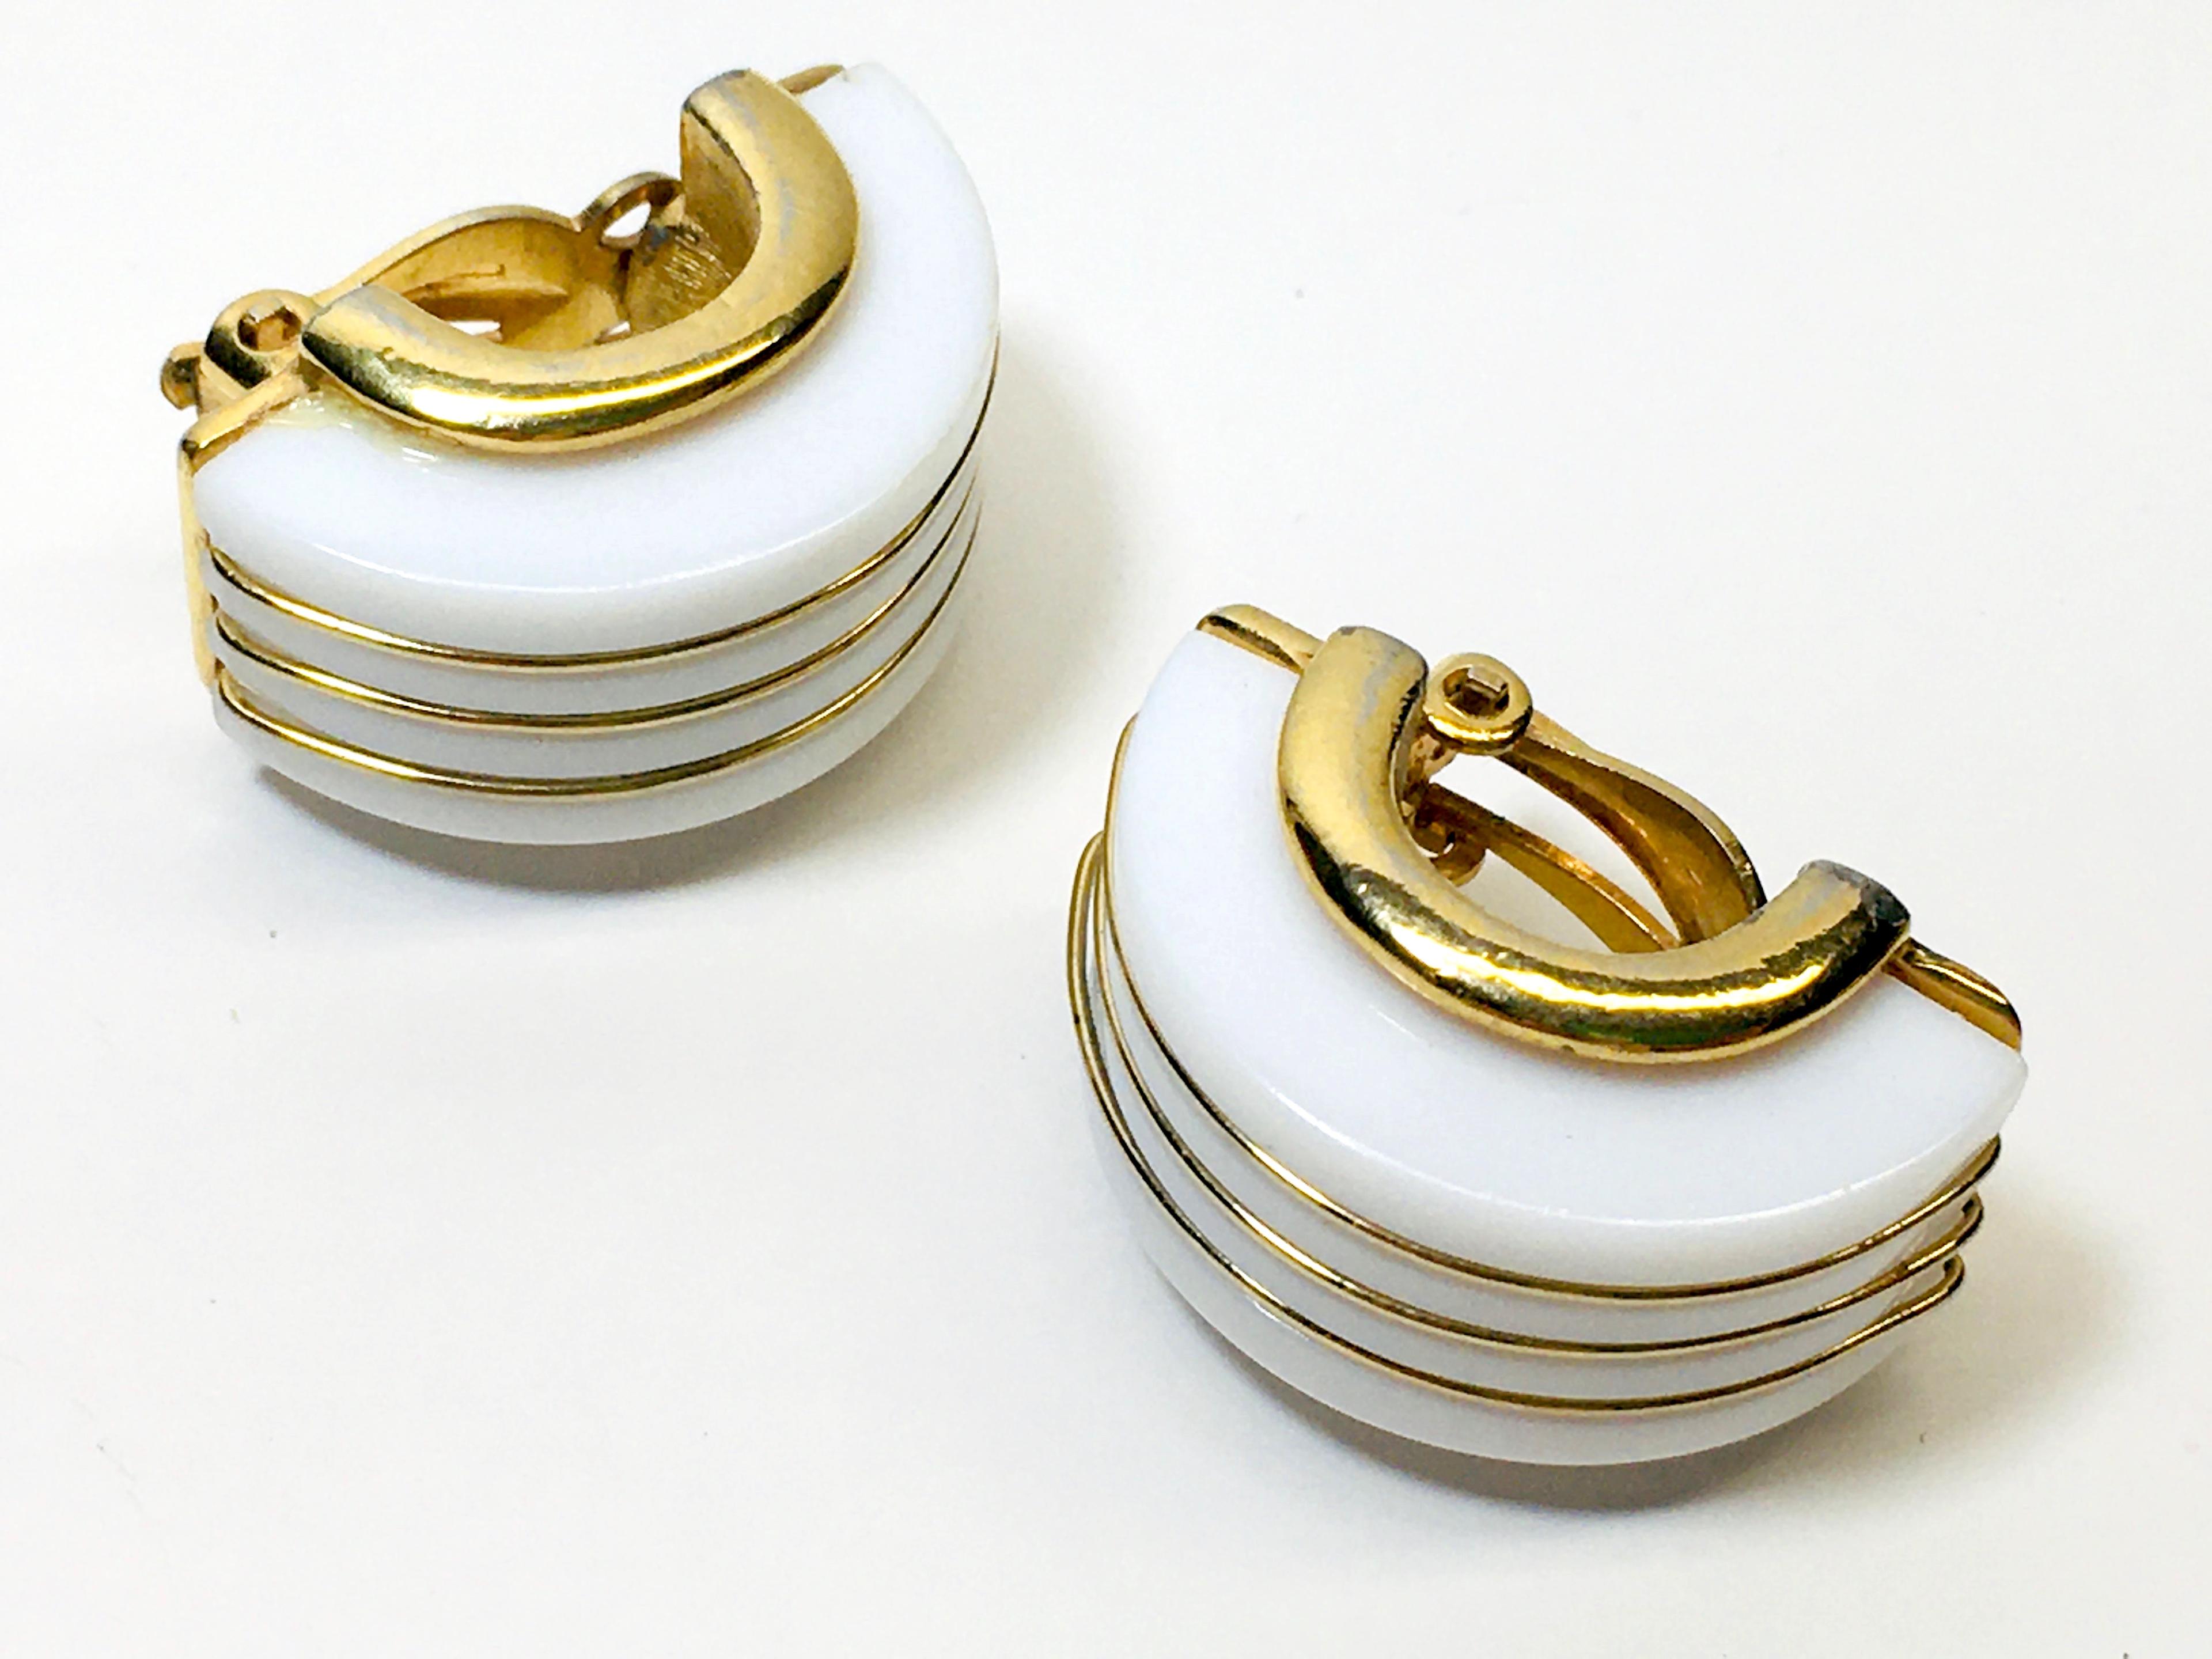 TRIFARI Clip Earrings - Gold Metal & White Banded Art Deco Style